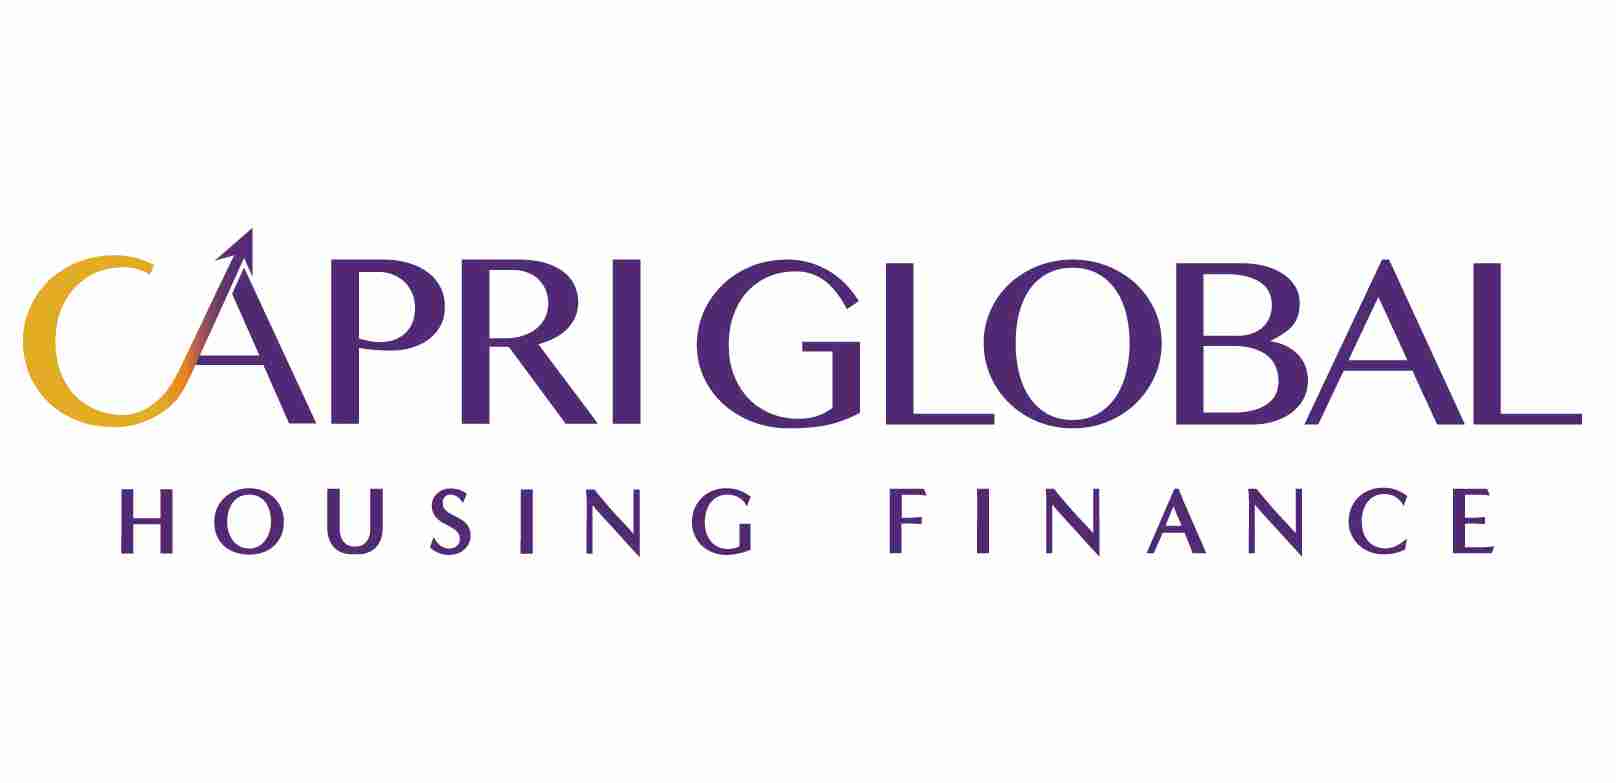 Capri-Global-Housing-Finance1